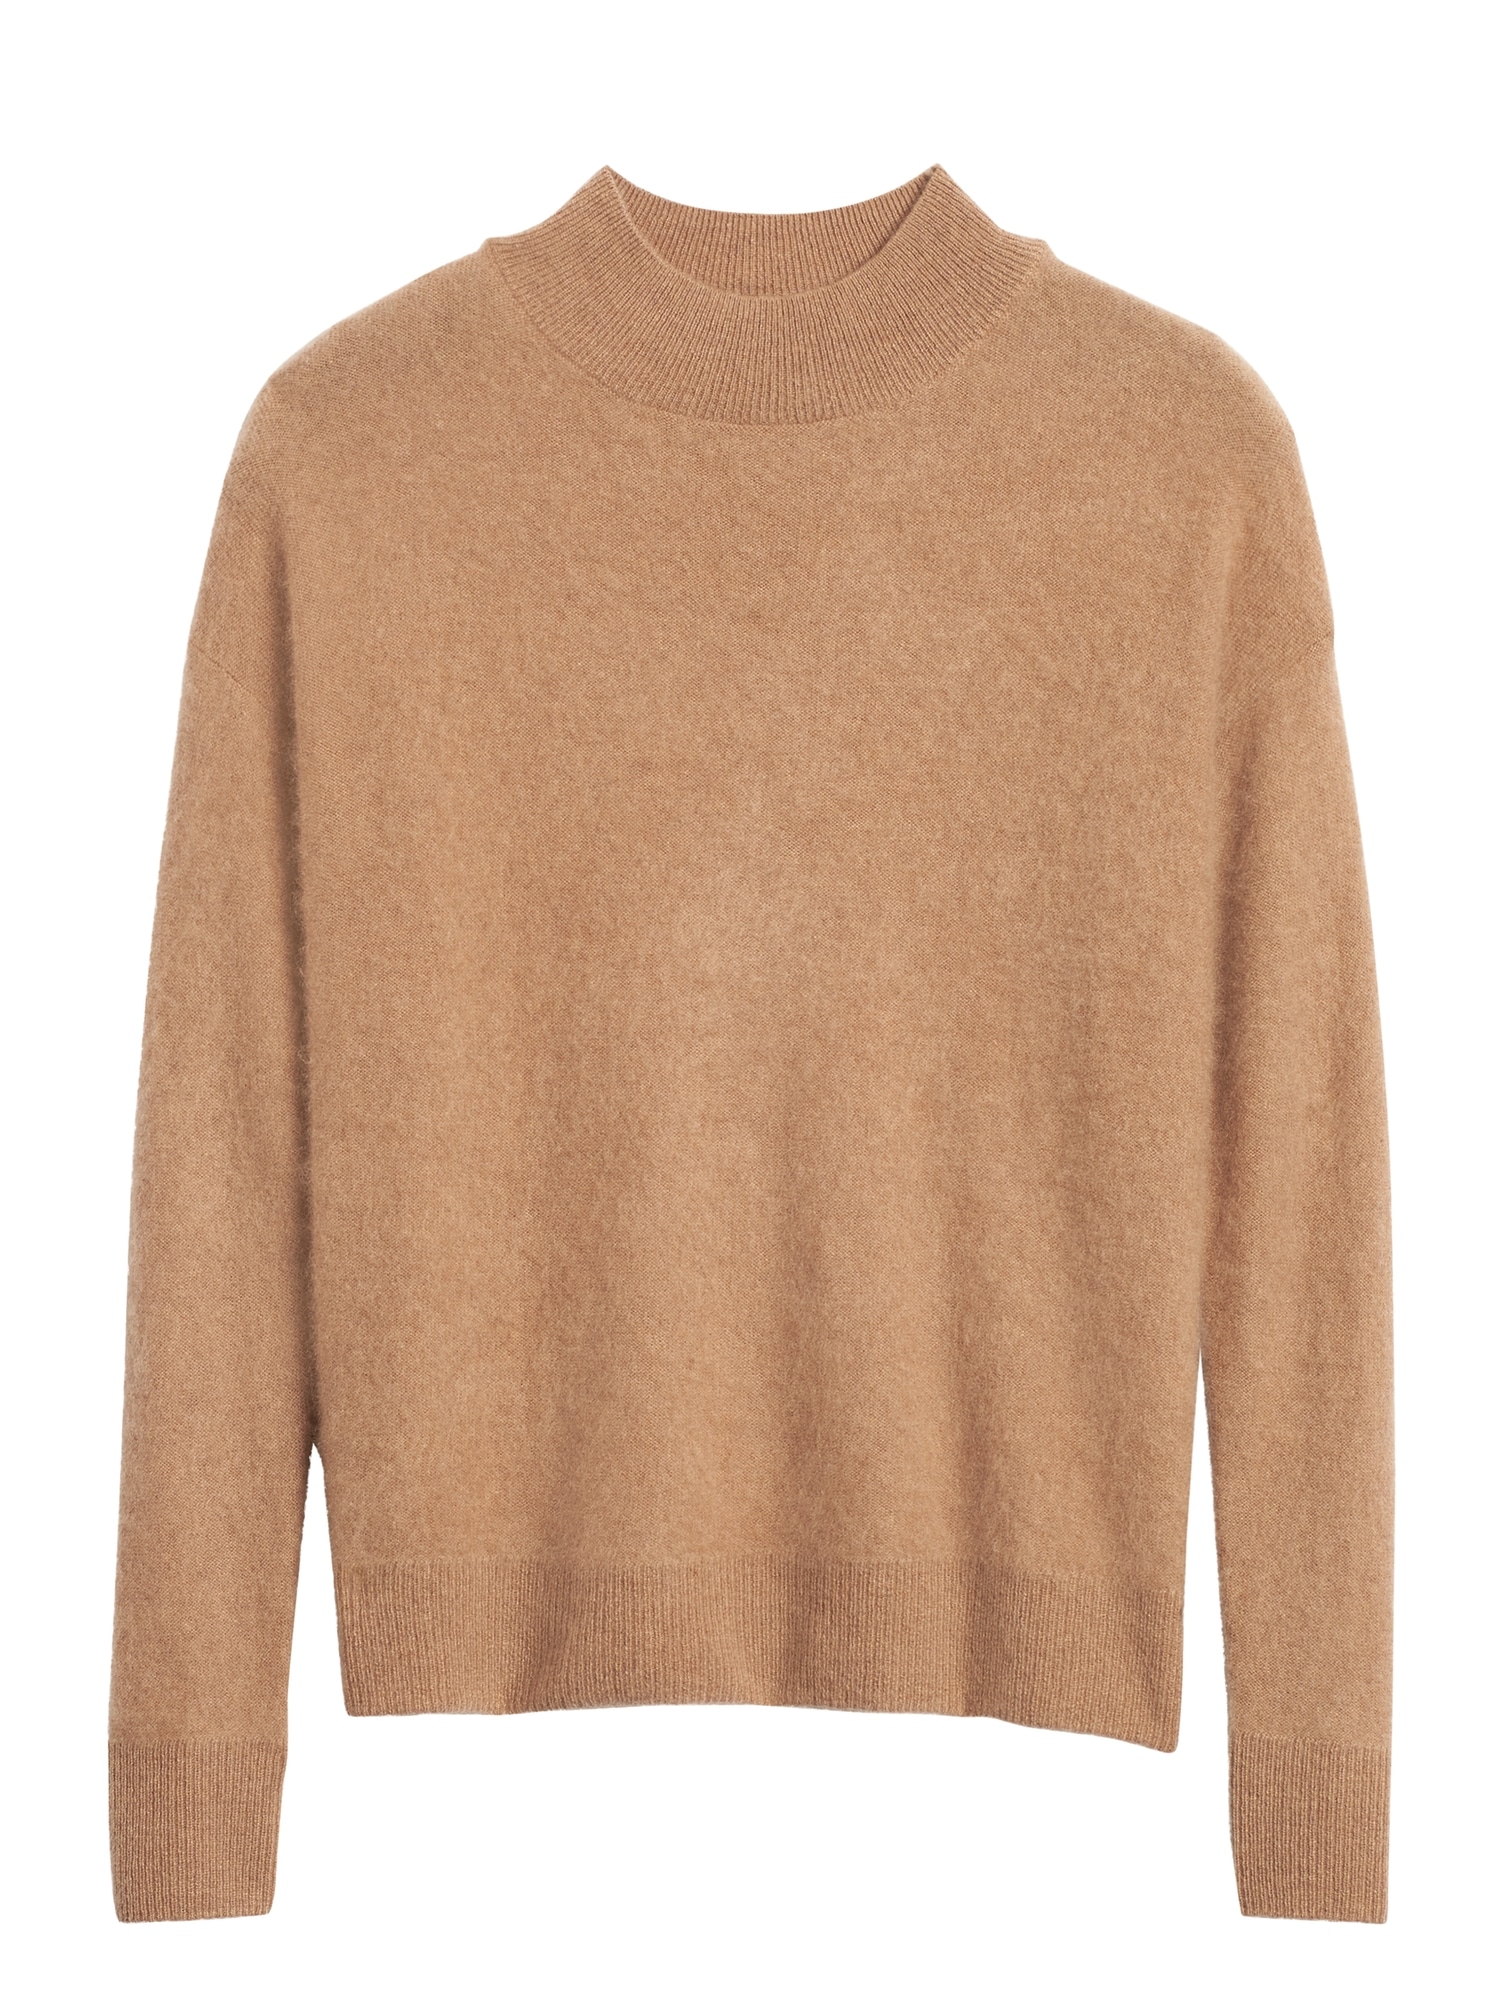 Brushed Cashmere Mock-Neck Sweater